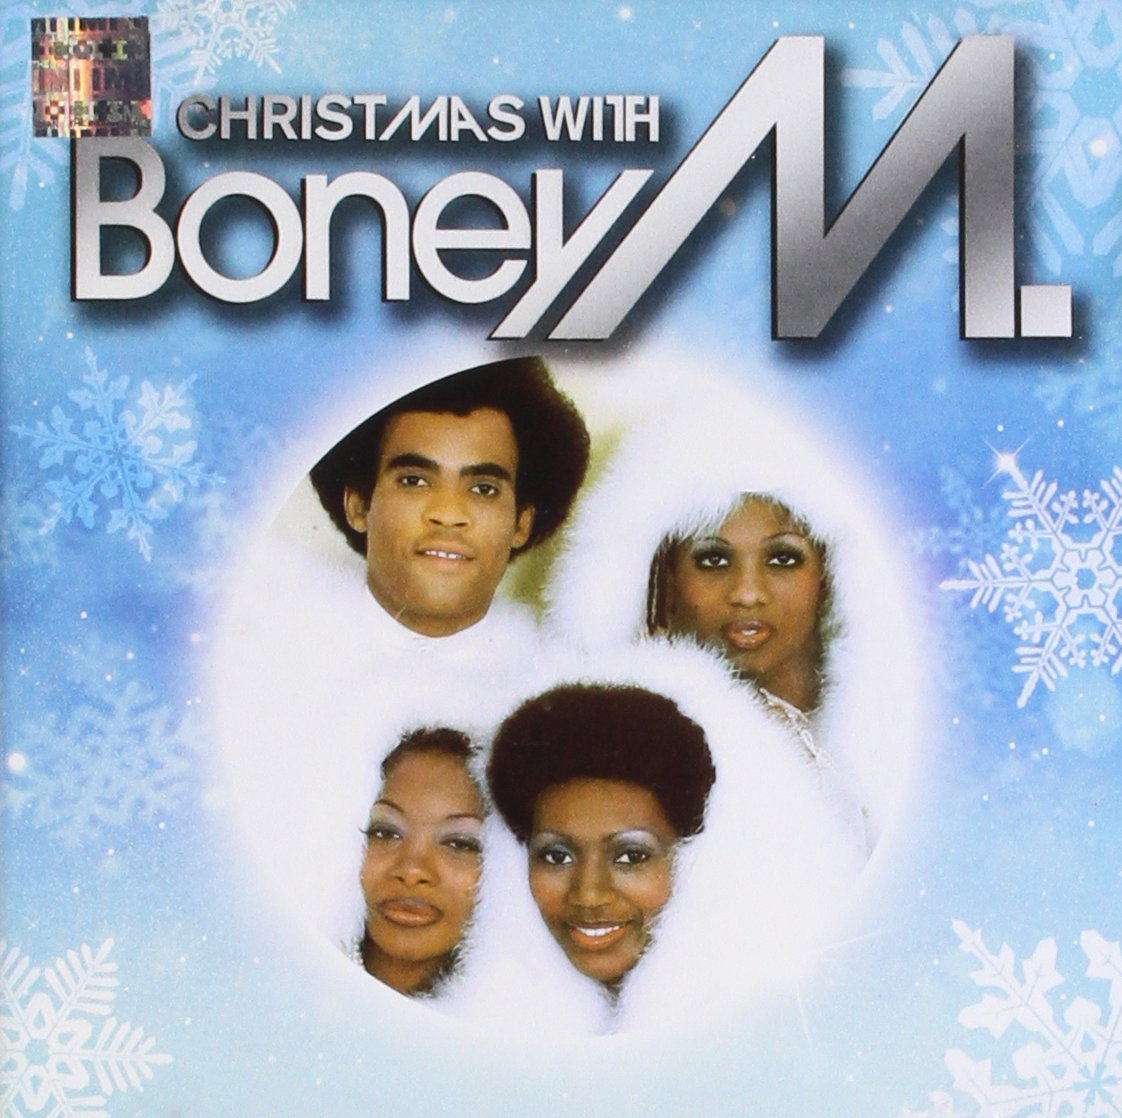 Boney m на русском. Группа Boney m. 1978. Группа Бони эм. Boney m 1975. Группа Boney m. 2020.